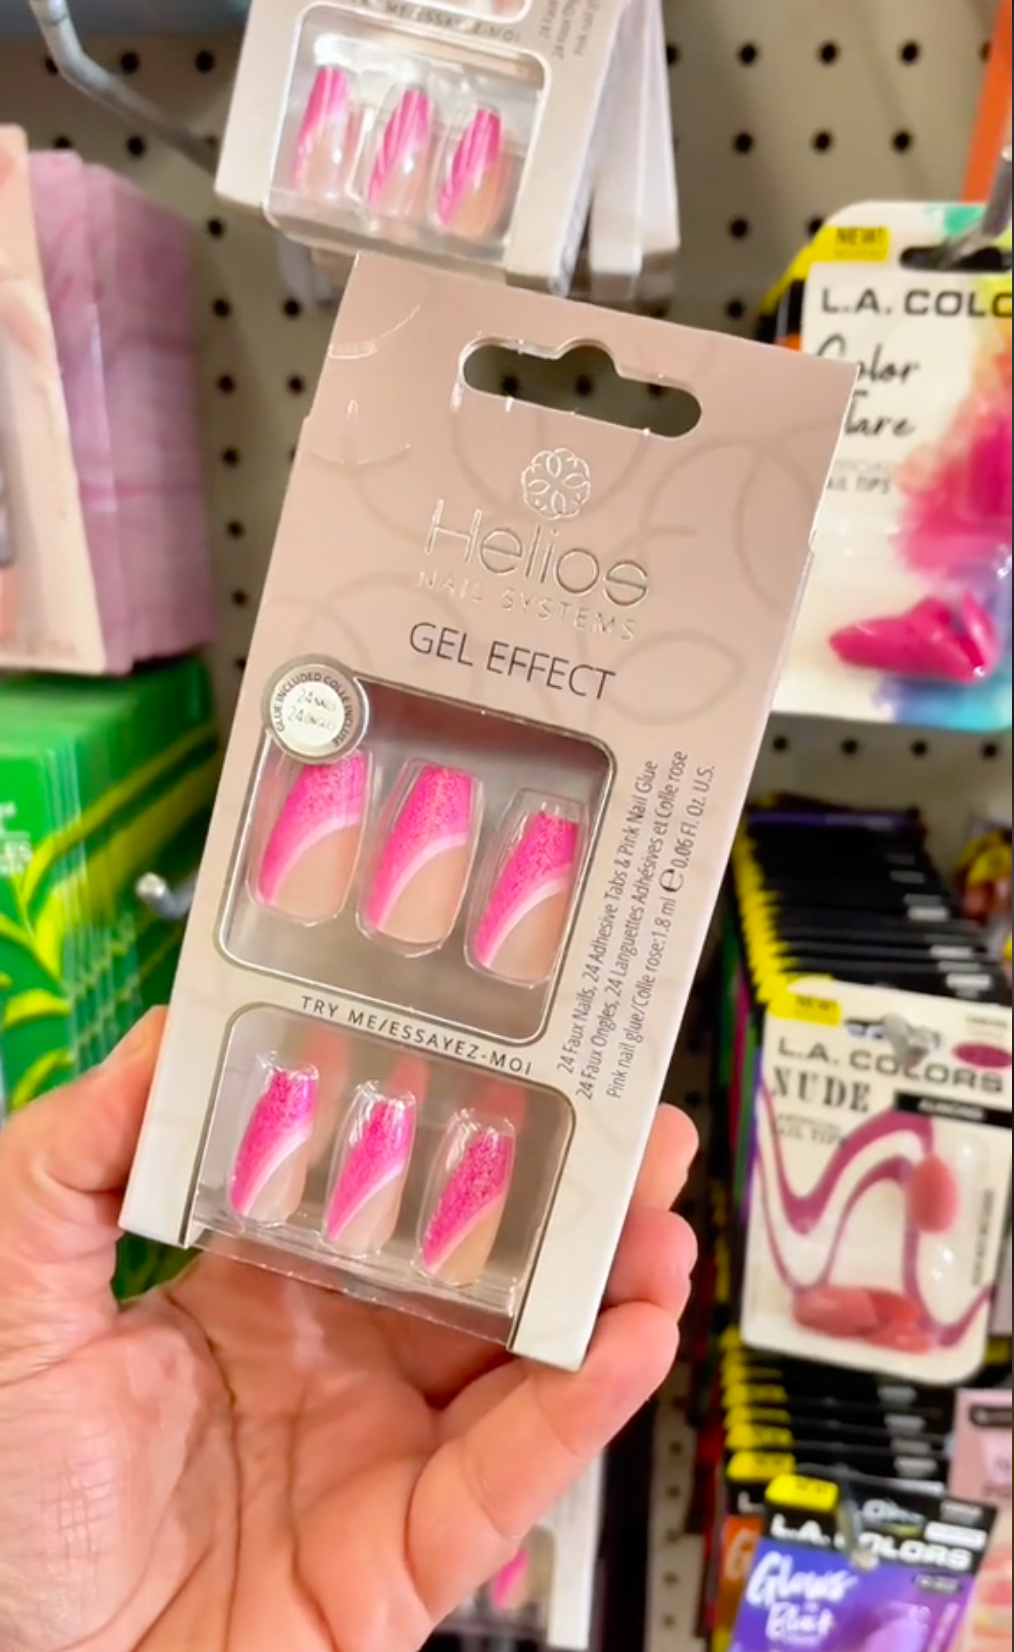 Helios Gel Effect press on nails